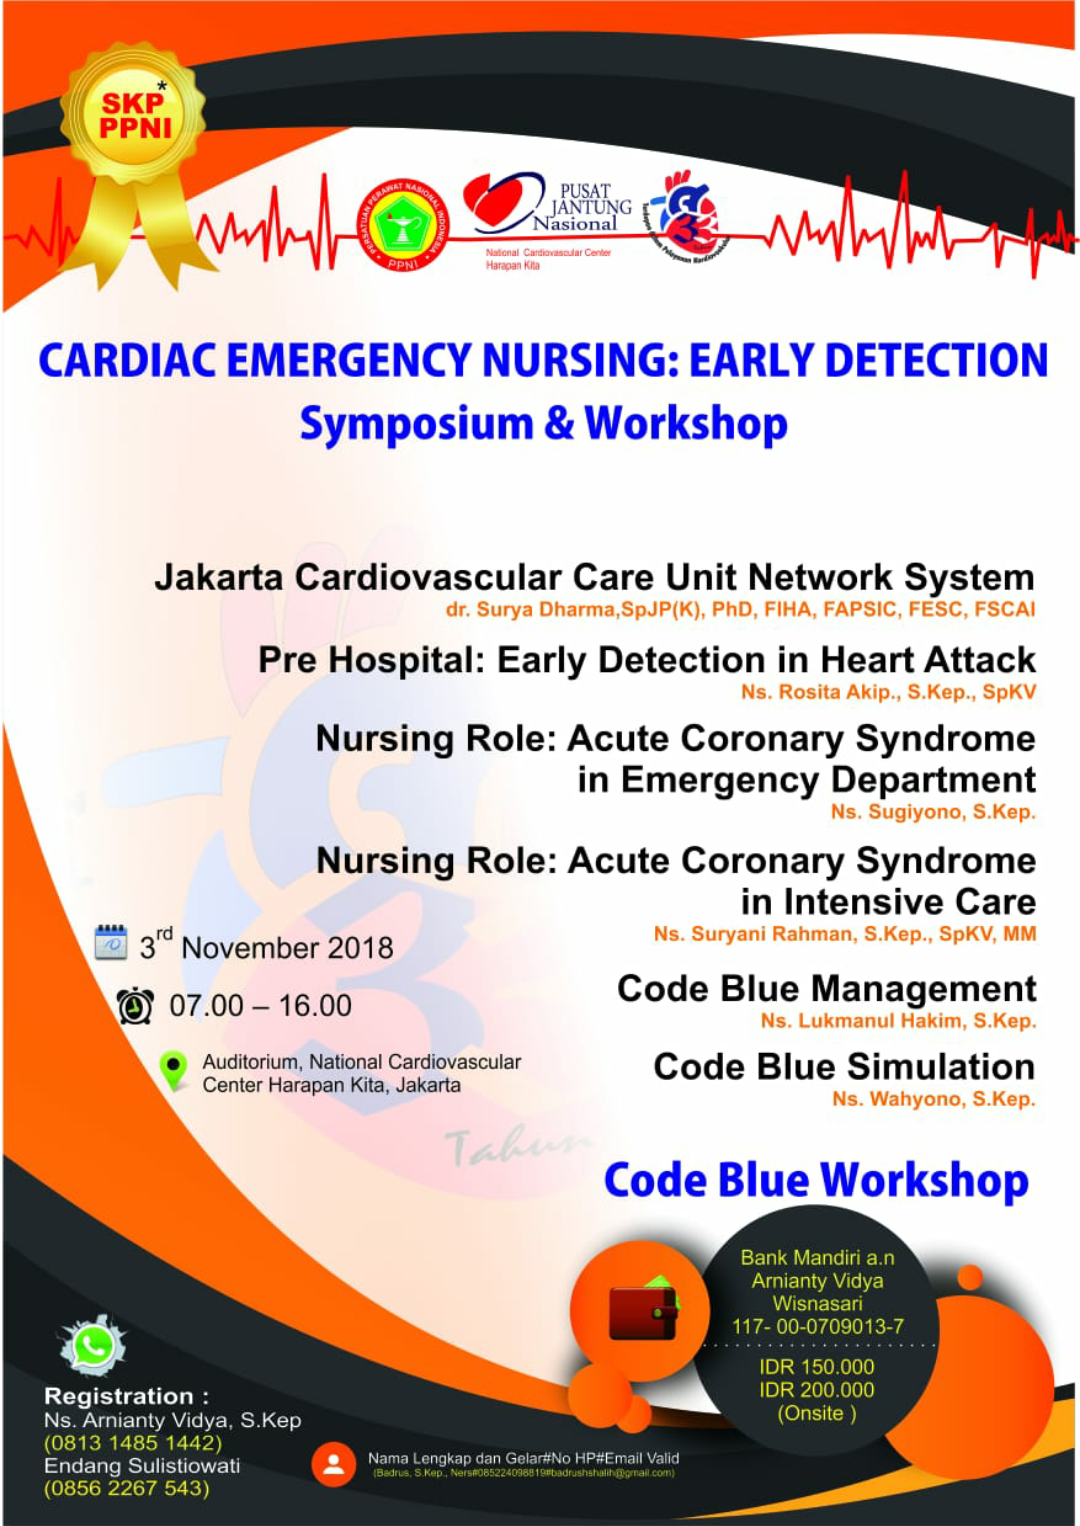 Cardiac Emergency Nursing: Early Detection